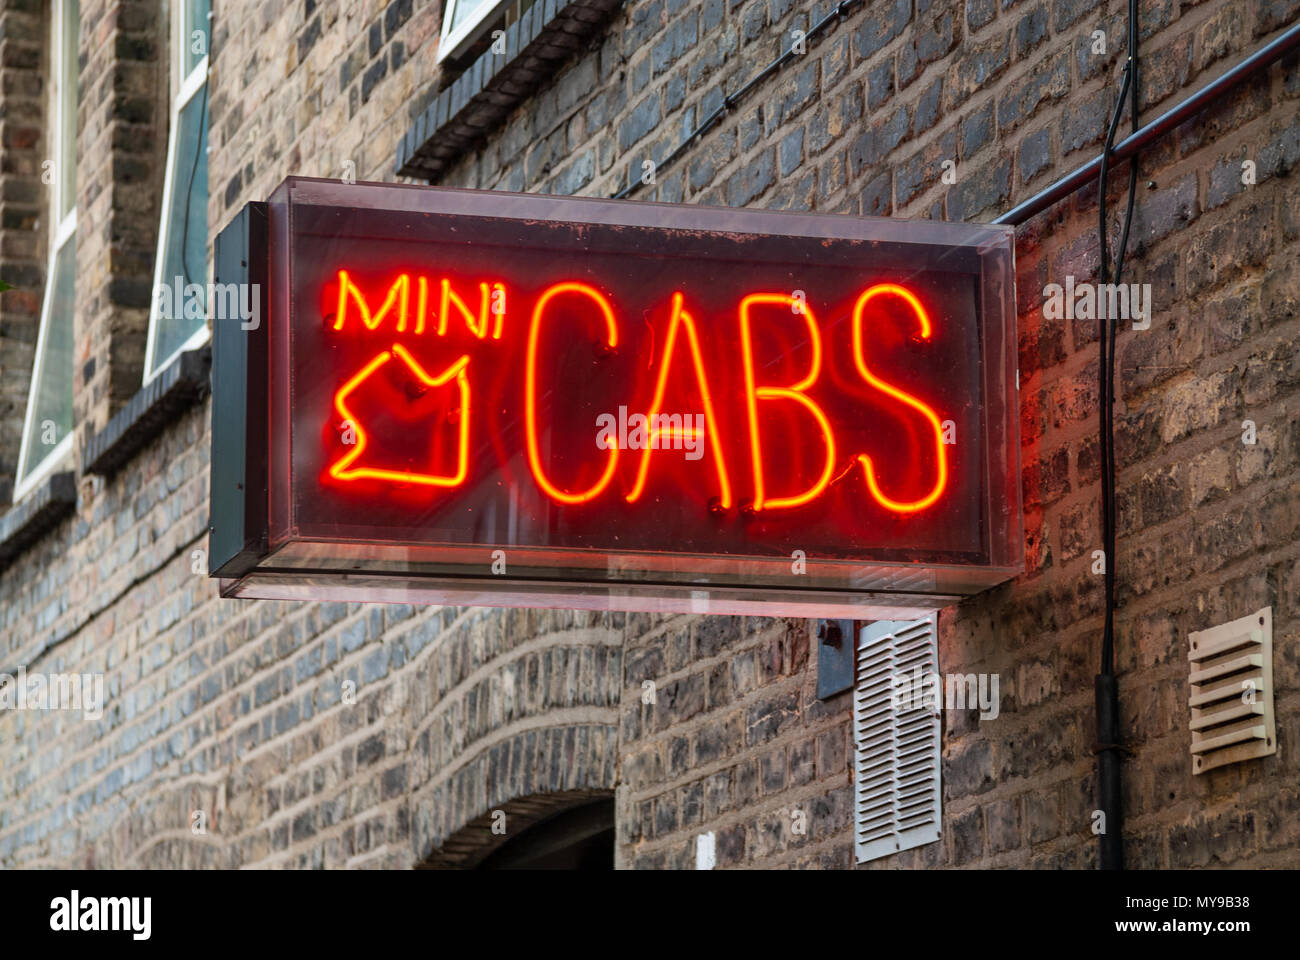 Mini cab office sign, London, UK Stock Photo